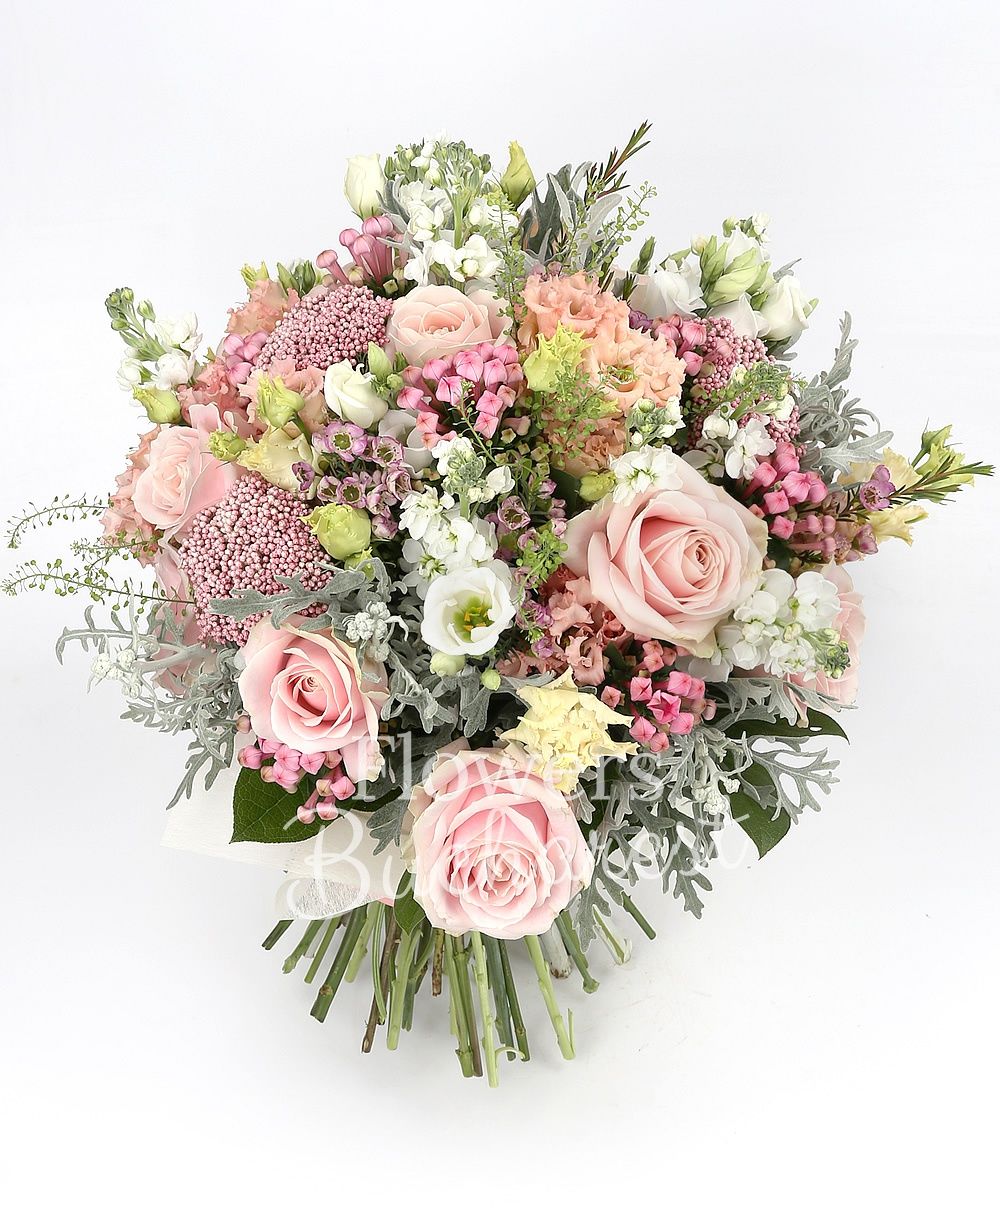 10 pink roses, 10 white matthiola, 5 pink lisianthus, 10 pink bouvardia, 5 rice flower, 5 white lisianthus, 3 agapanthus, greenery